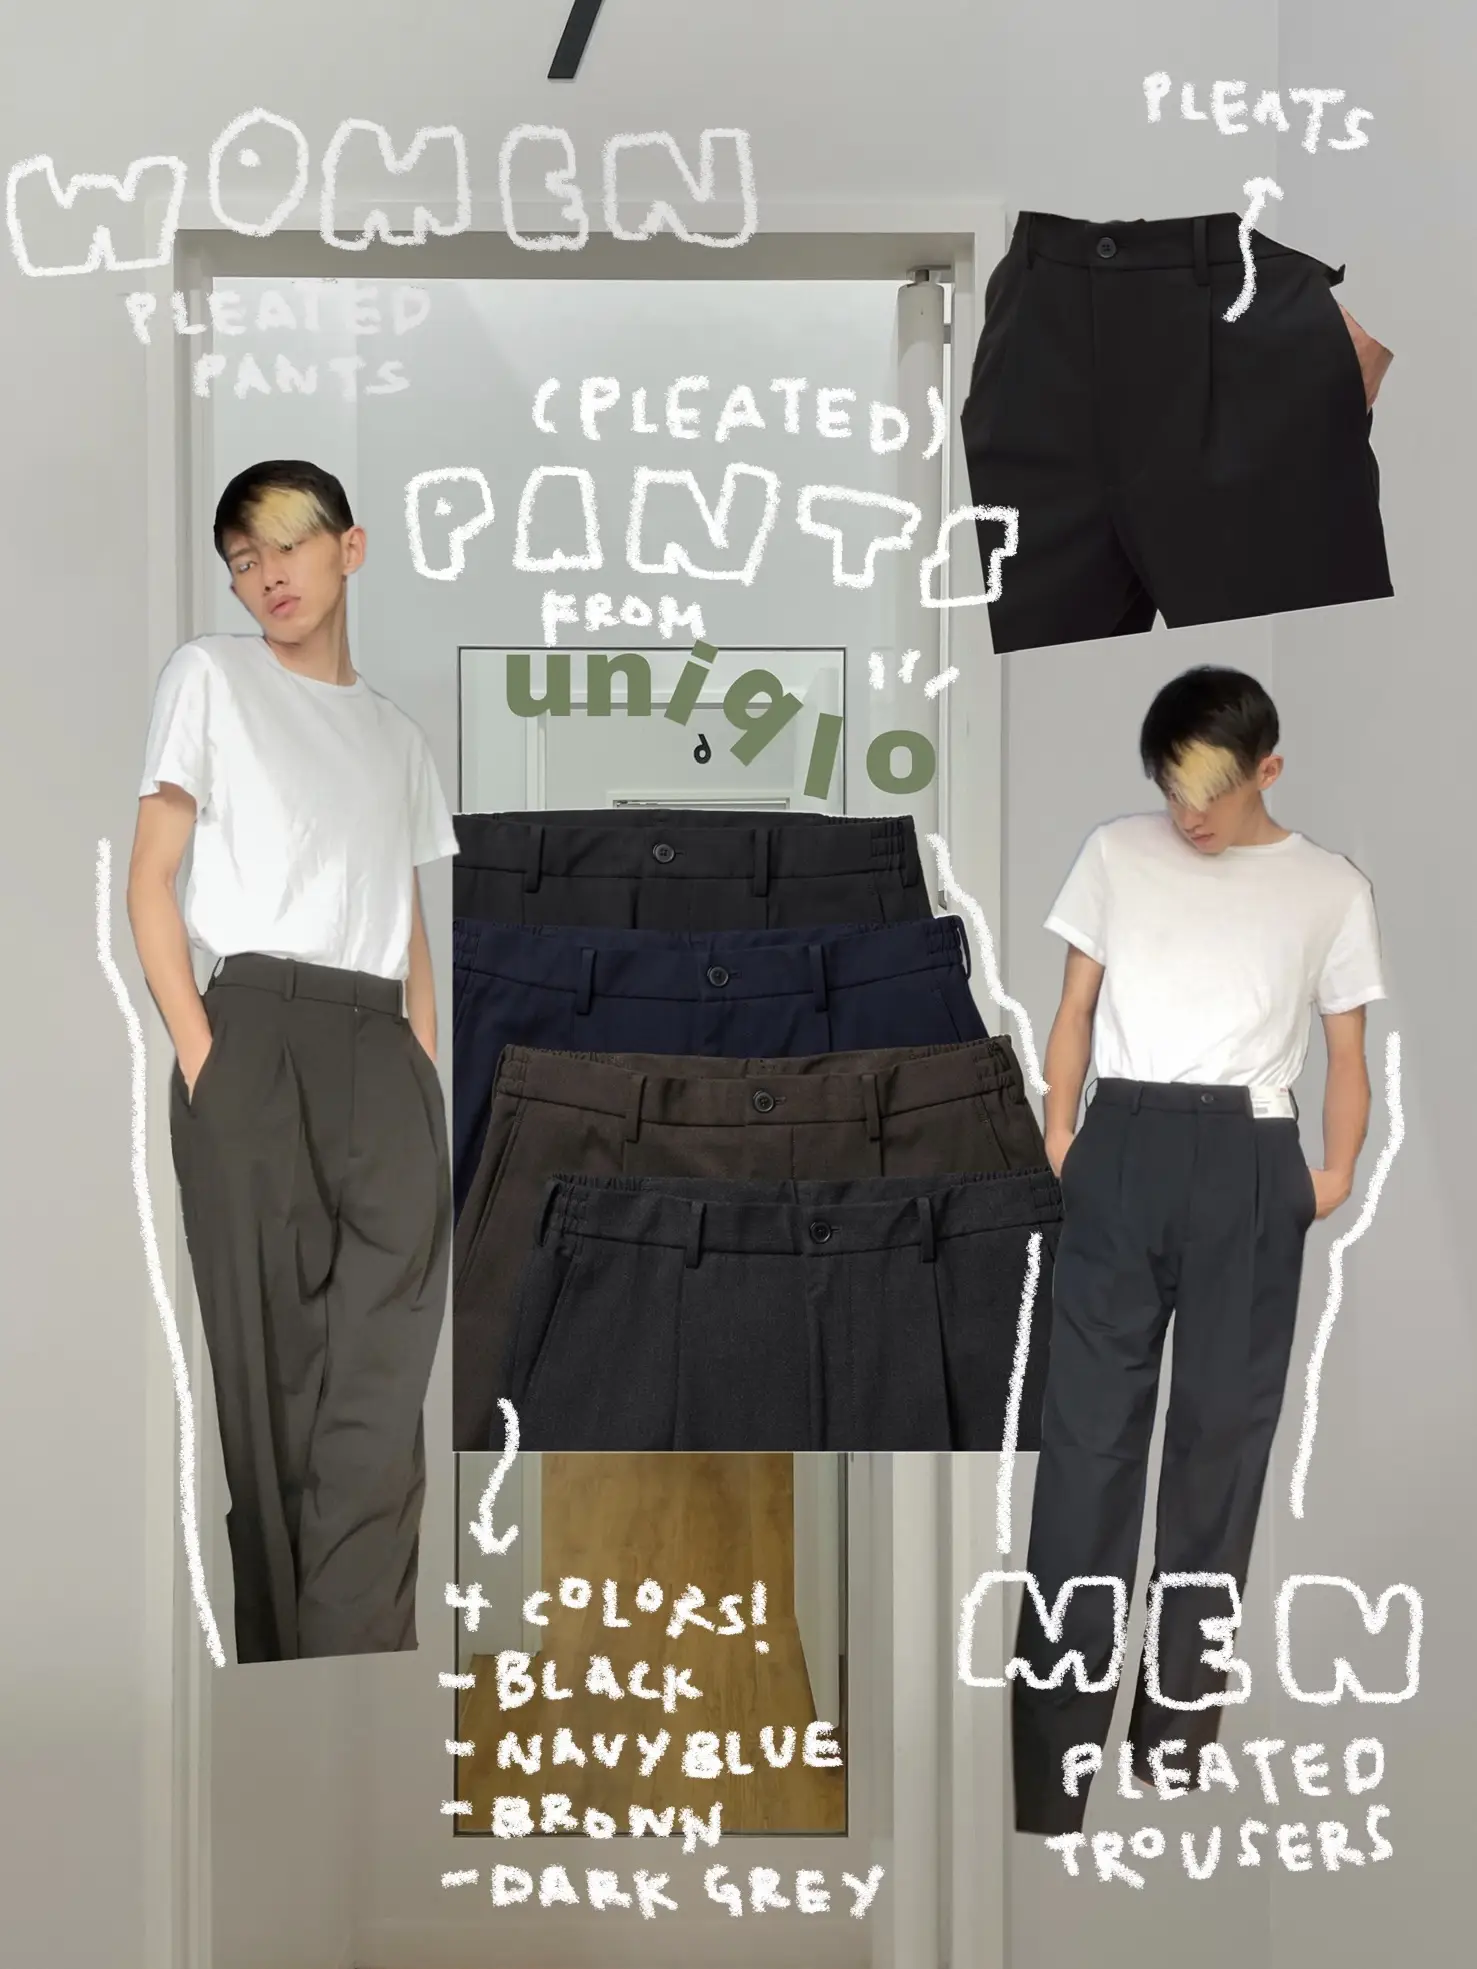 WOMEN vs MEN's pleated pants from uniqlo 👀